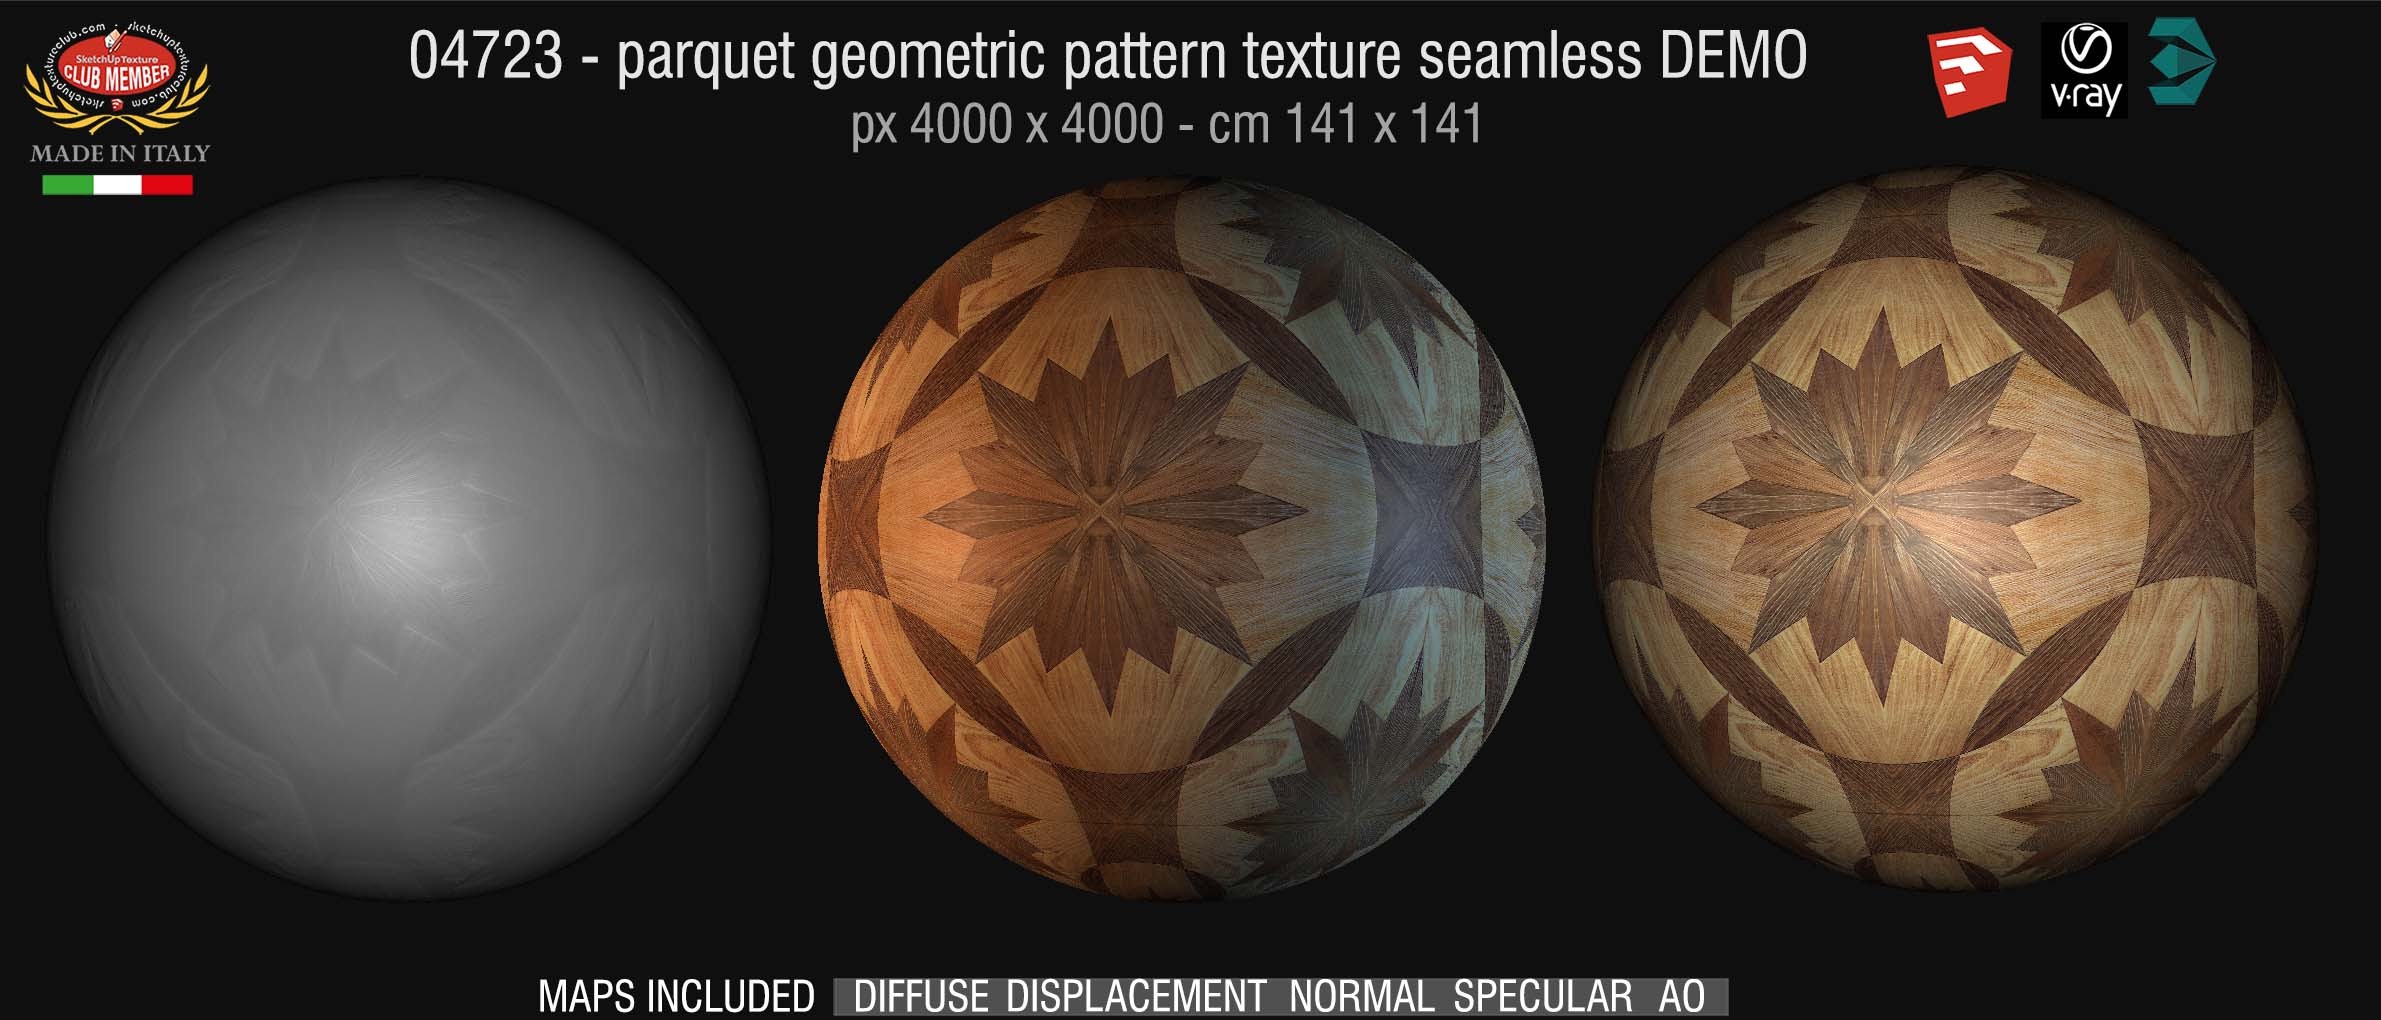 04723 HR Parquet geometric pattern texture seamless + maps DEMO